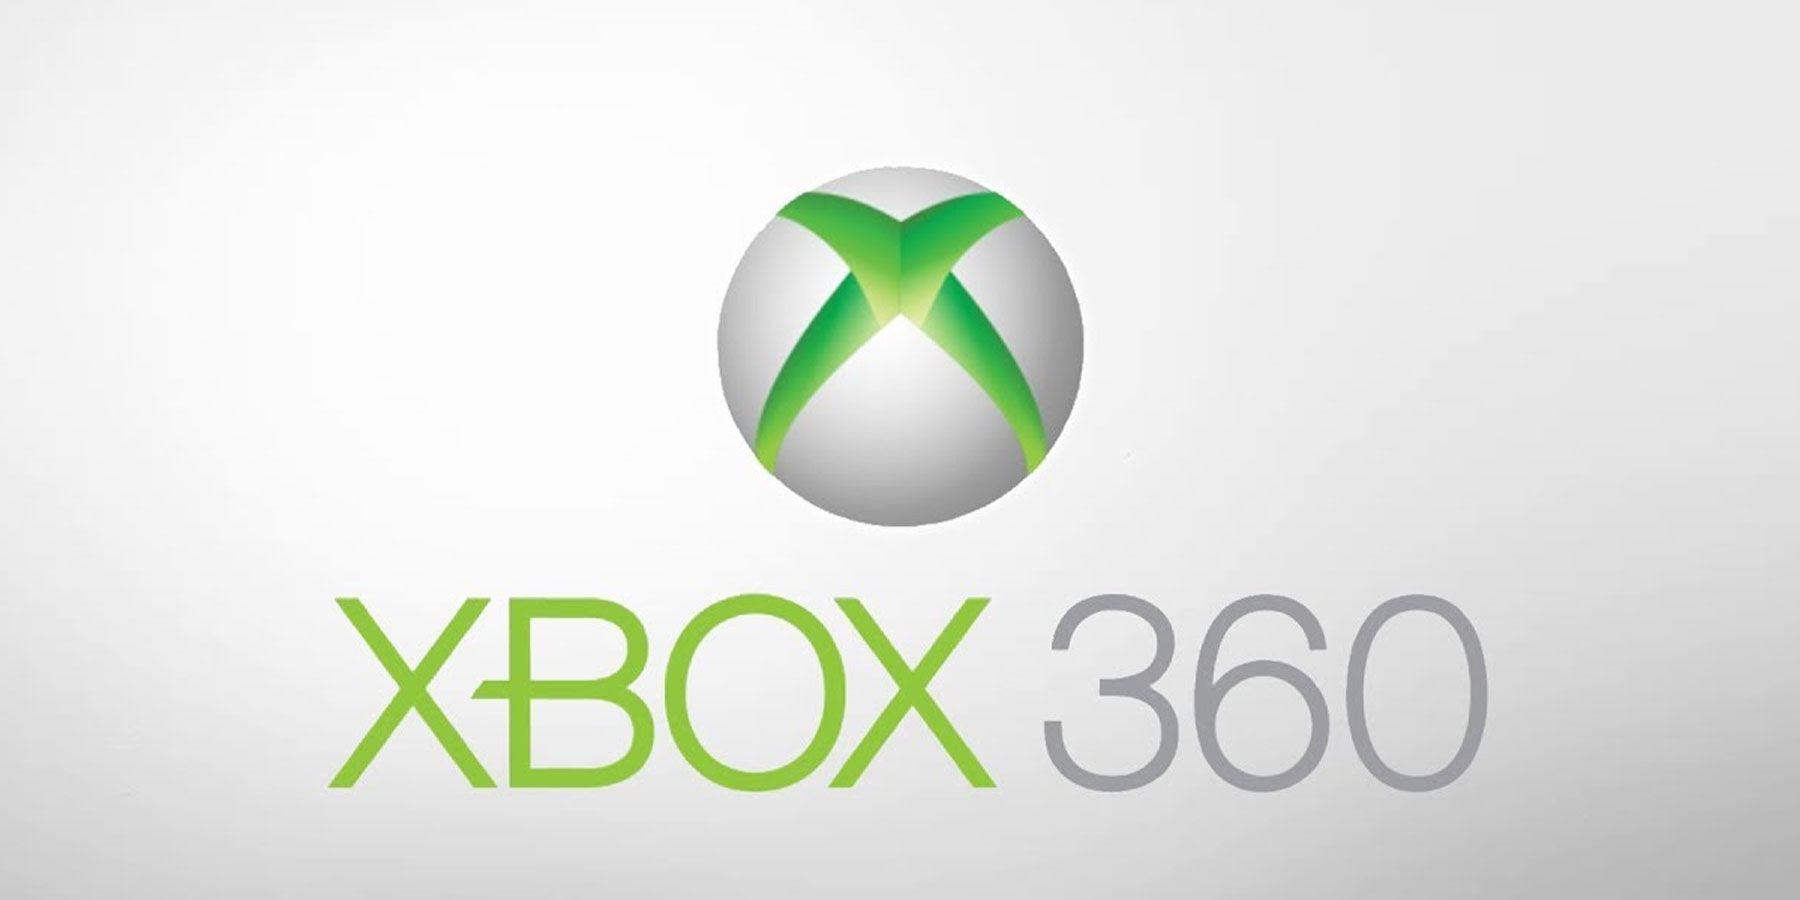 Xbox Series XS brings back old Xbox 360 gamerpics